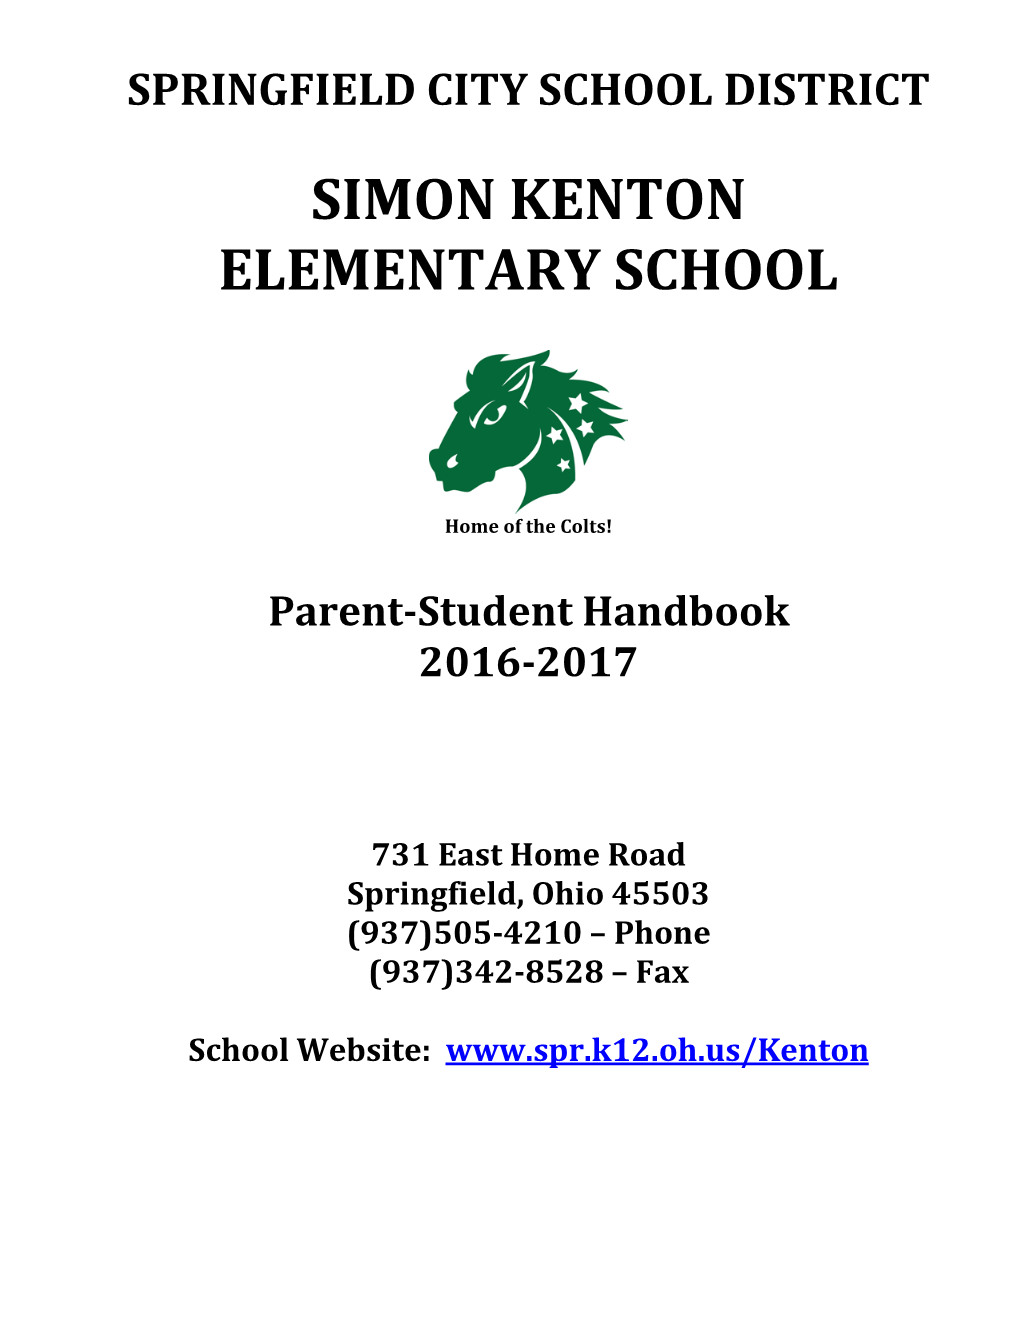 Simon Kenton Elementary School